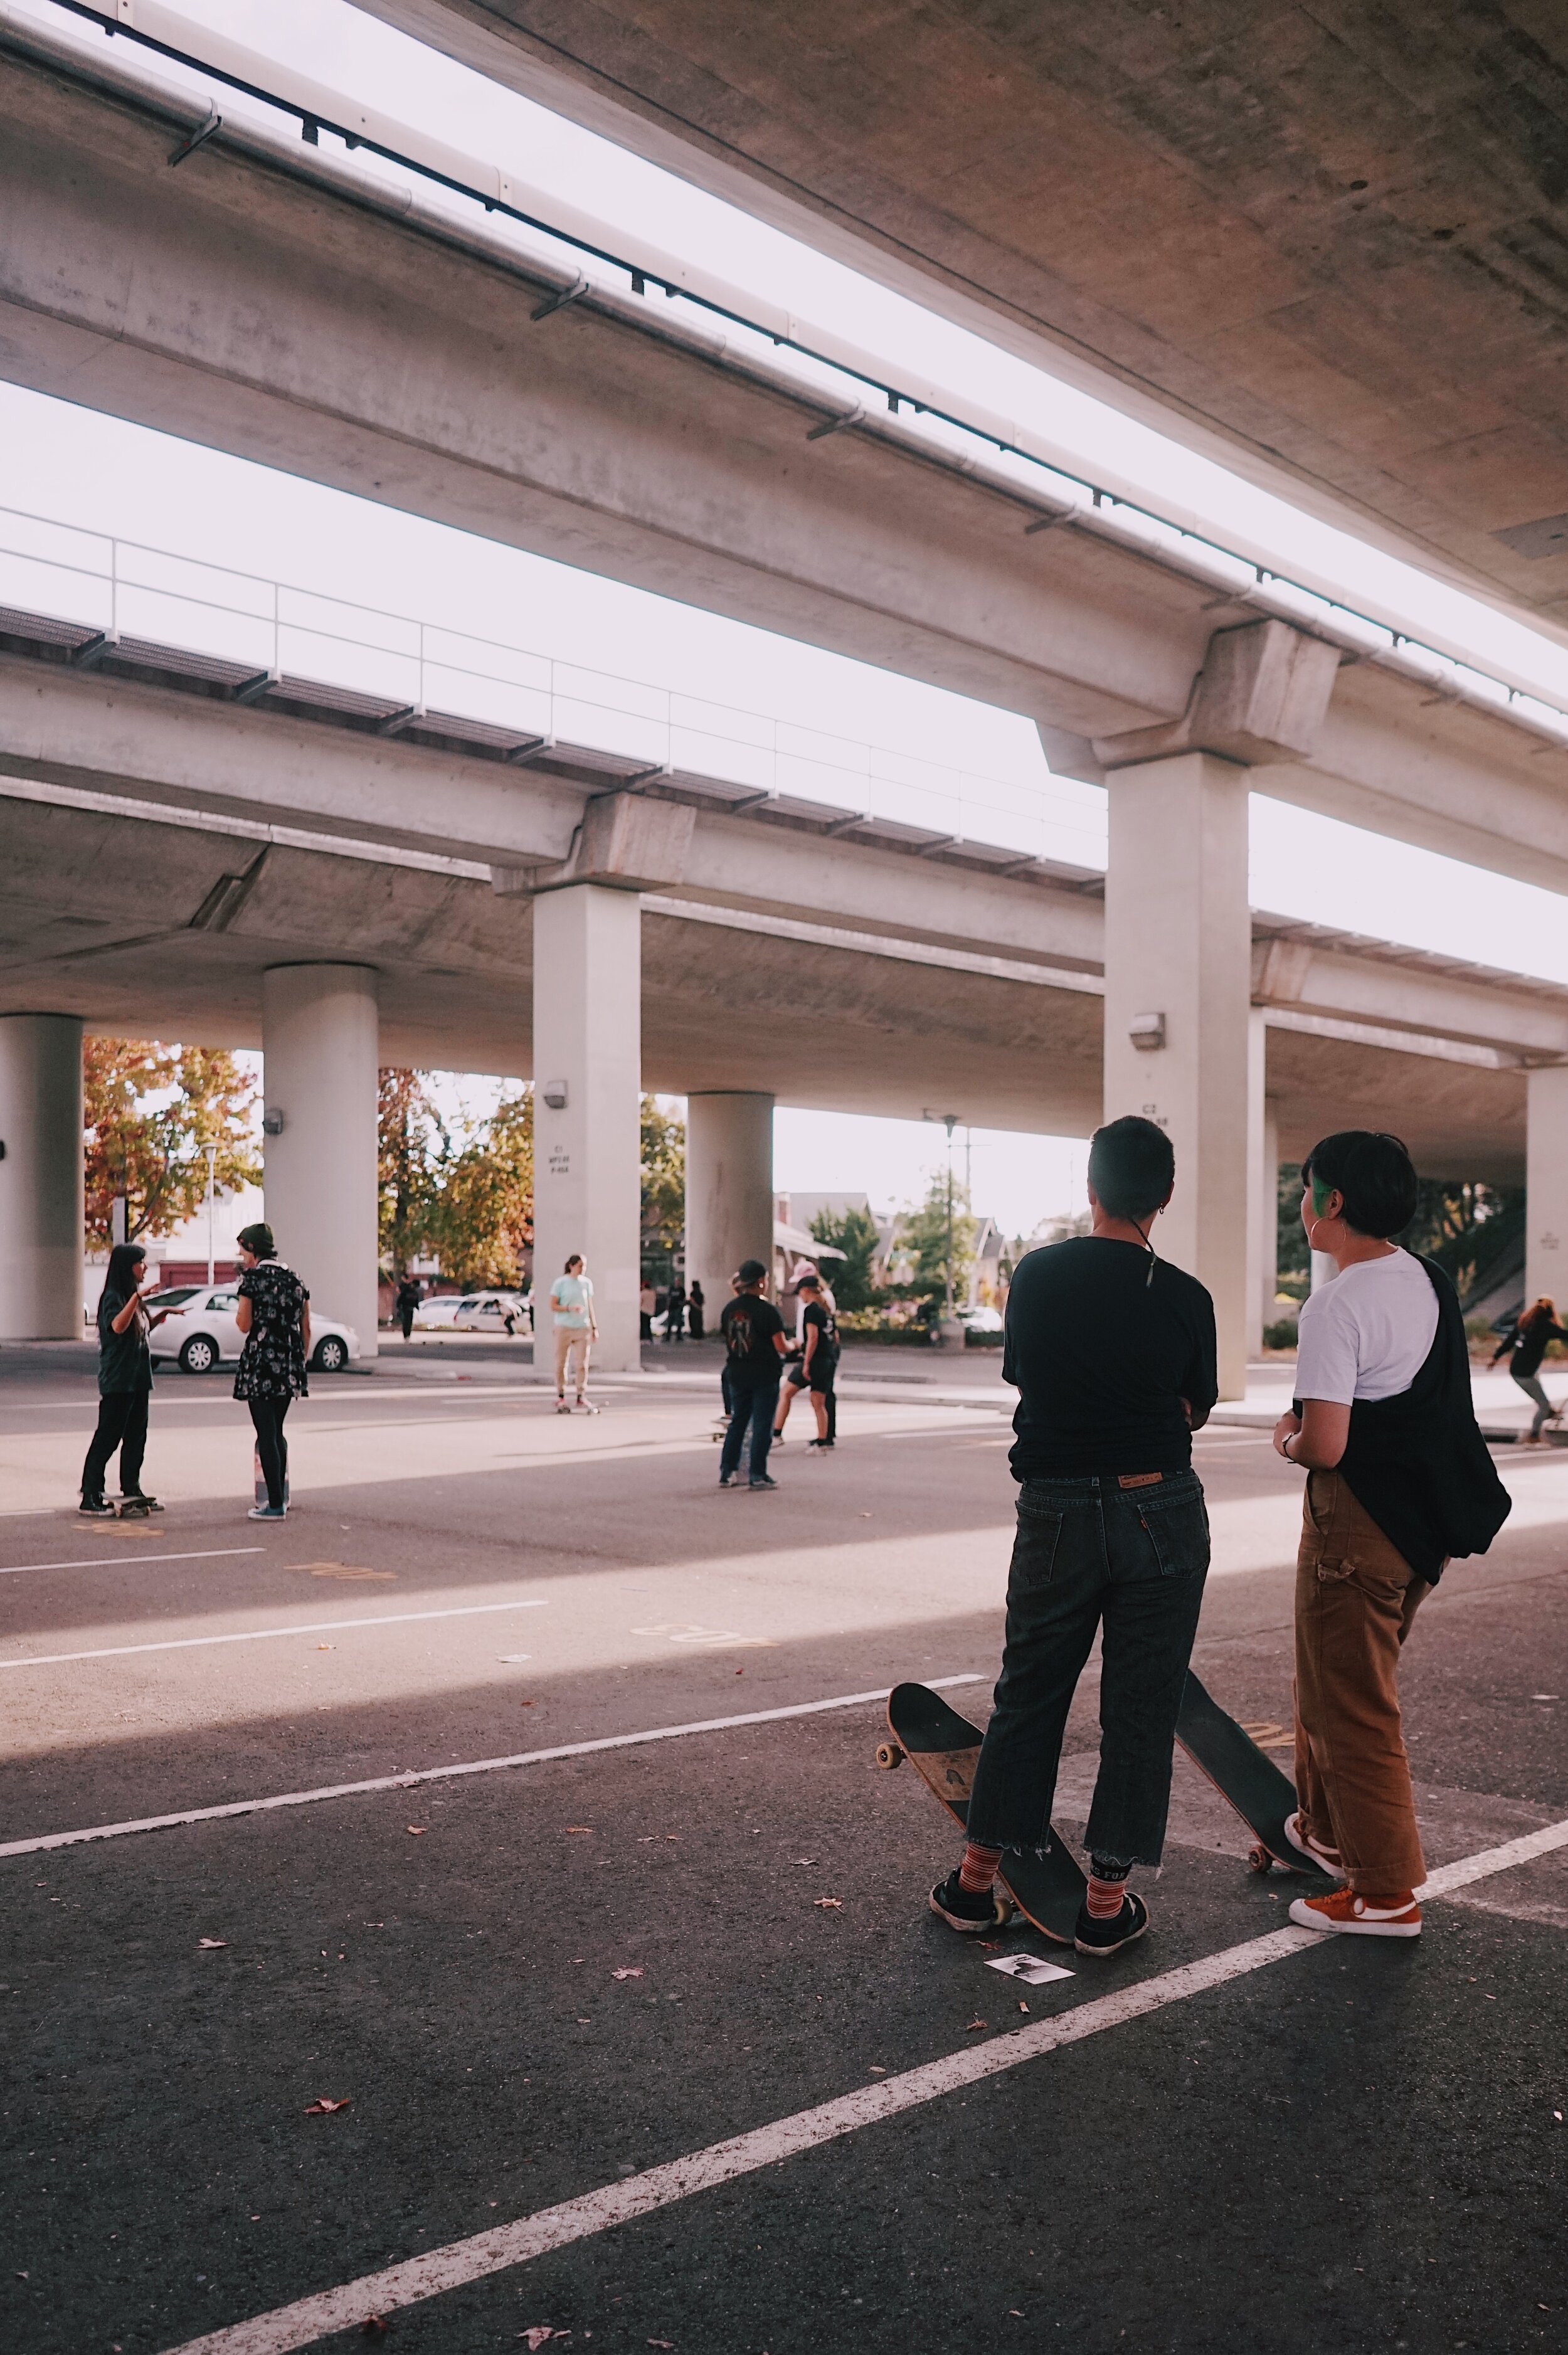  Unity Skateboarding meet up - Oakland, CA 